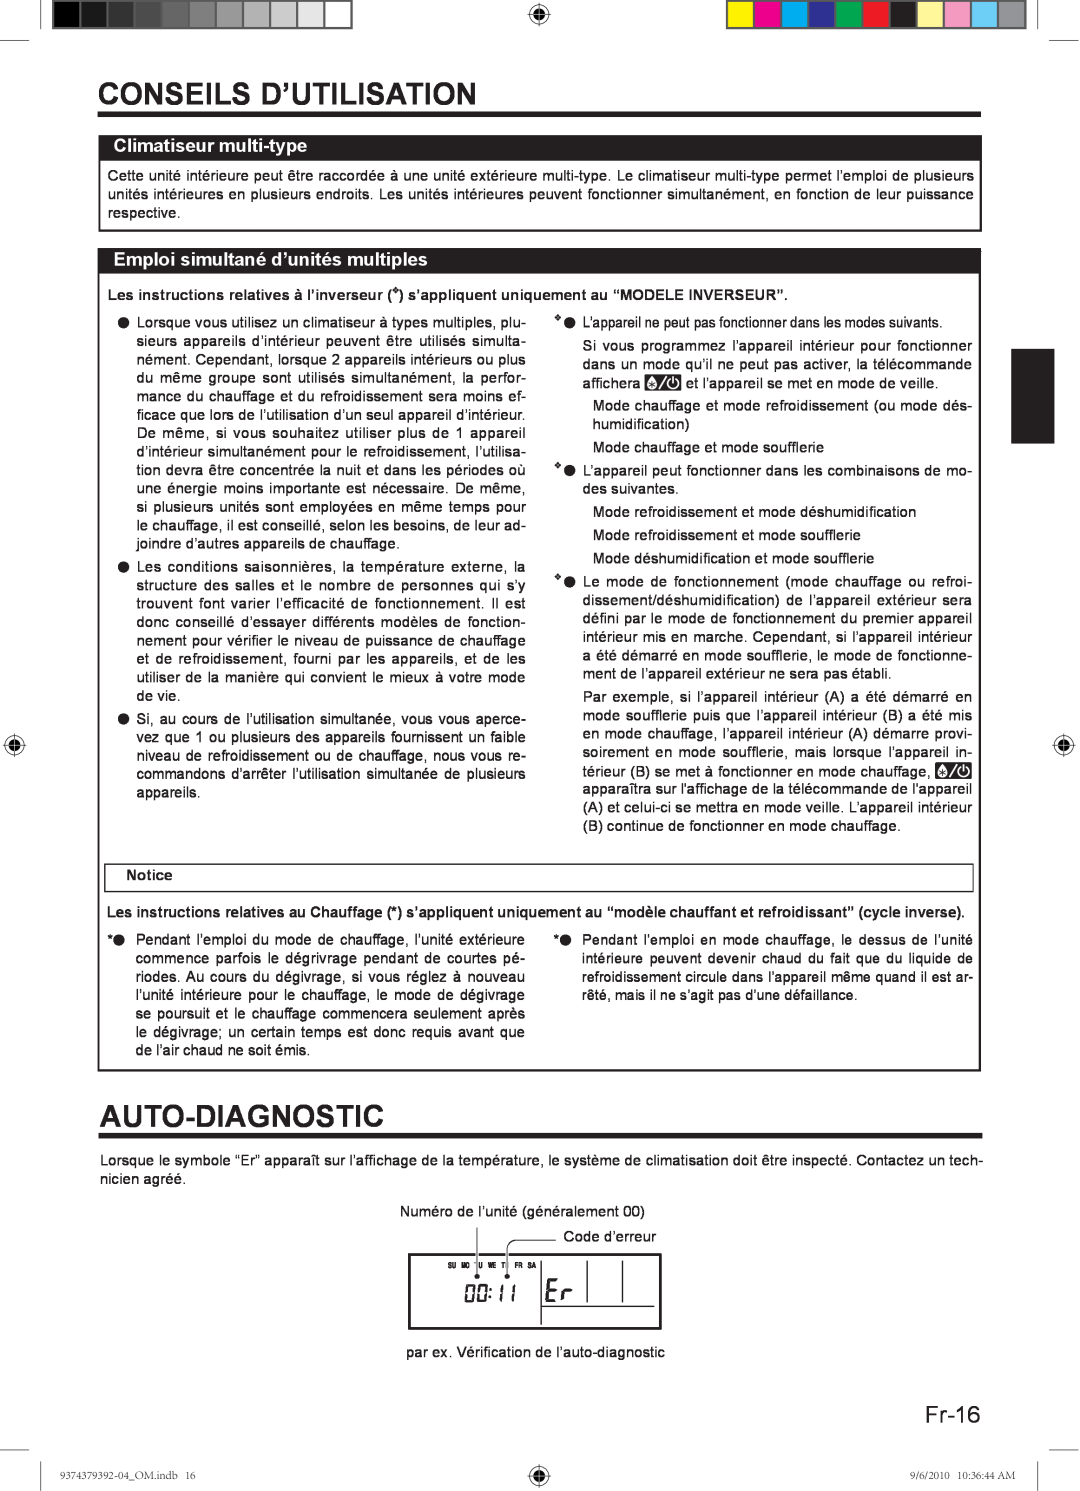 Fujitsu 9374379392-04, Halcyon Air Conditioner manual Auto-Diagnostic, Fr-16, Conseils D’Utilisation, Climatiseur multi-type 